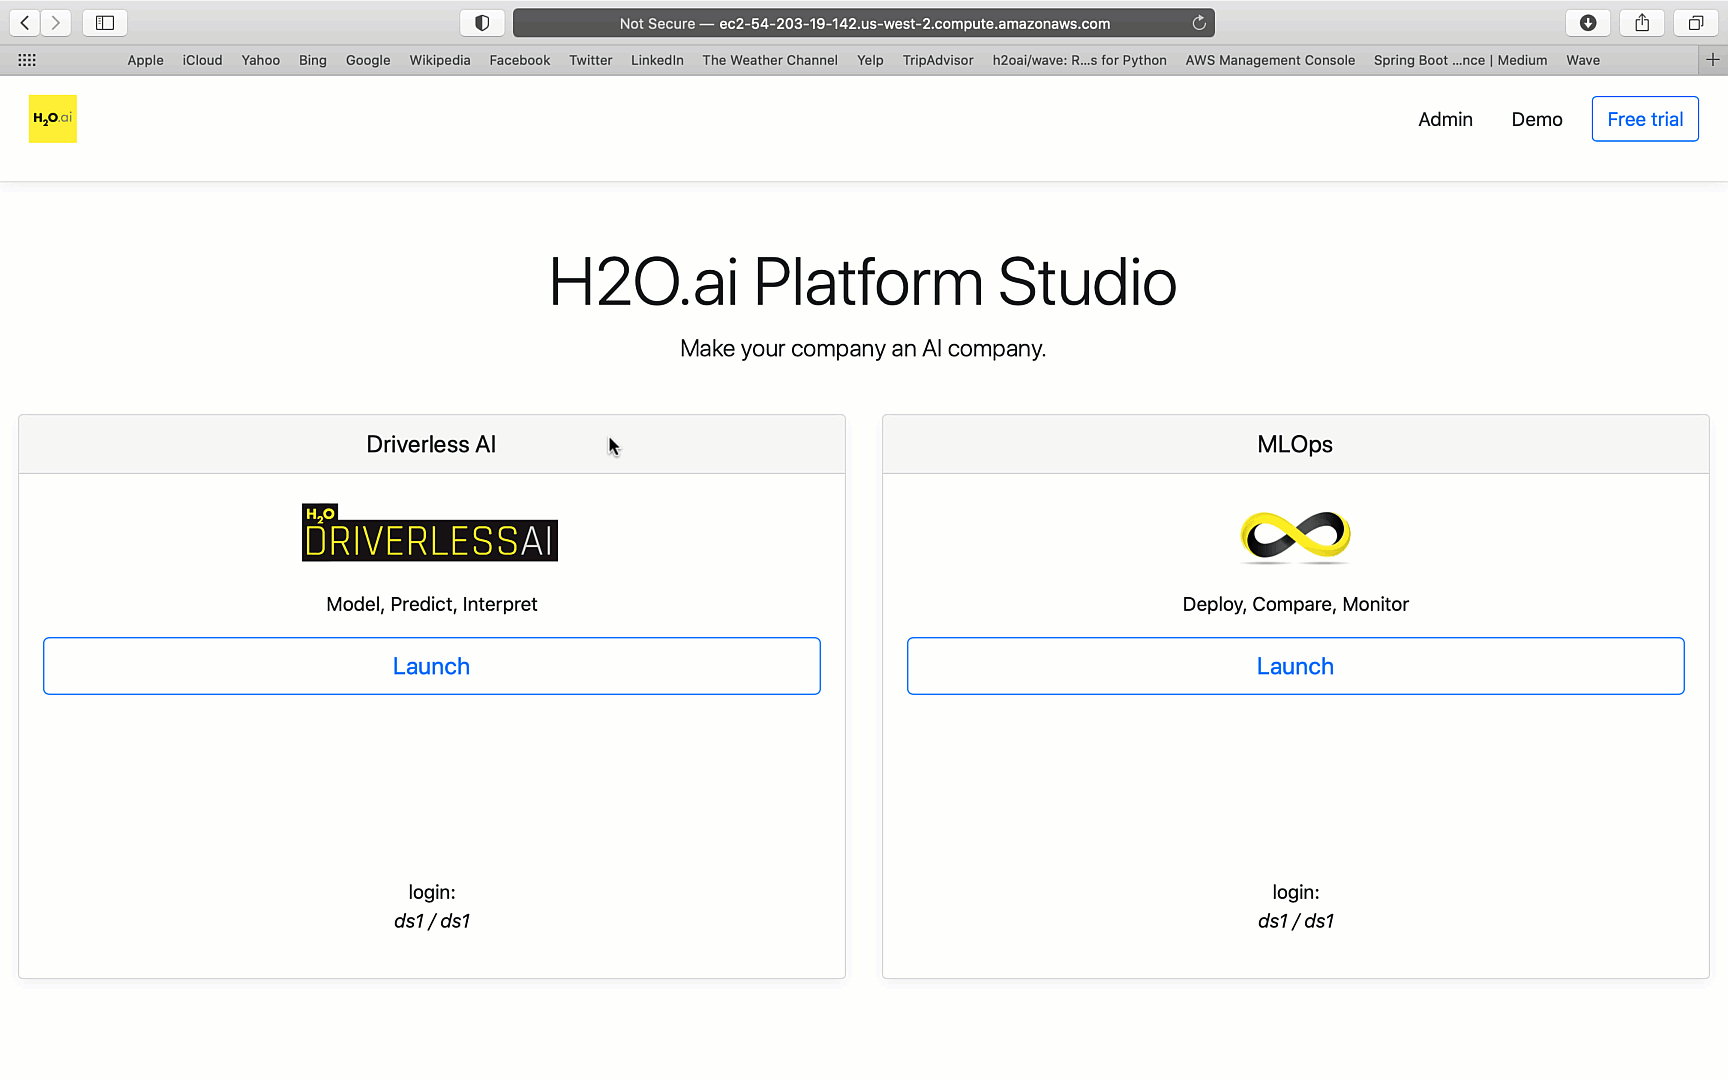 h2oai-platform-studio-MLOps